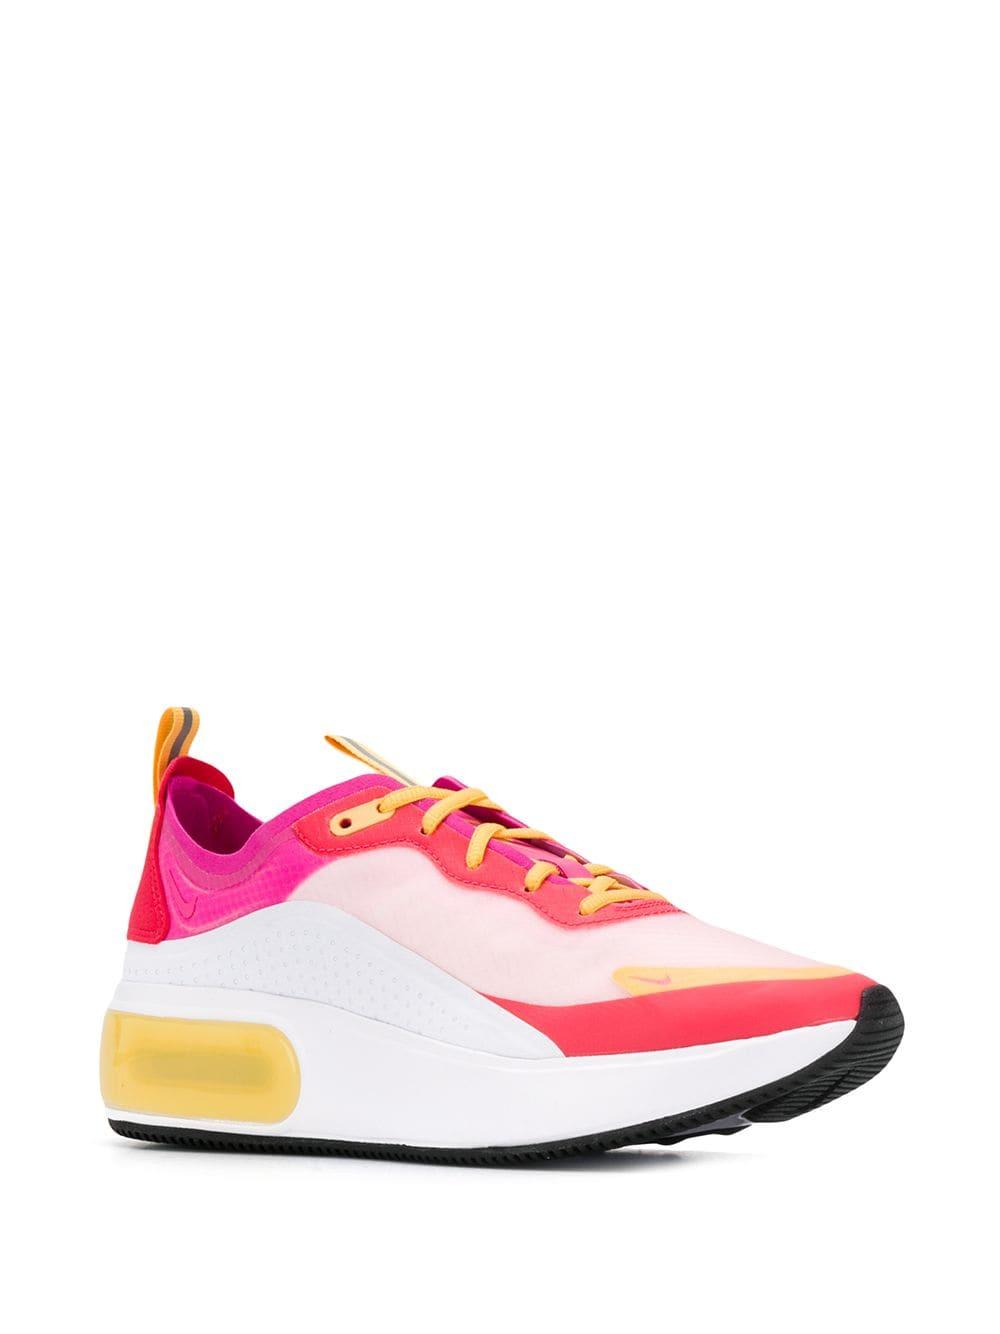 Nike Air Max Dia Se Sneakers in Pink - Lyst